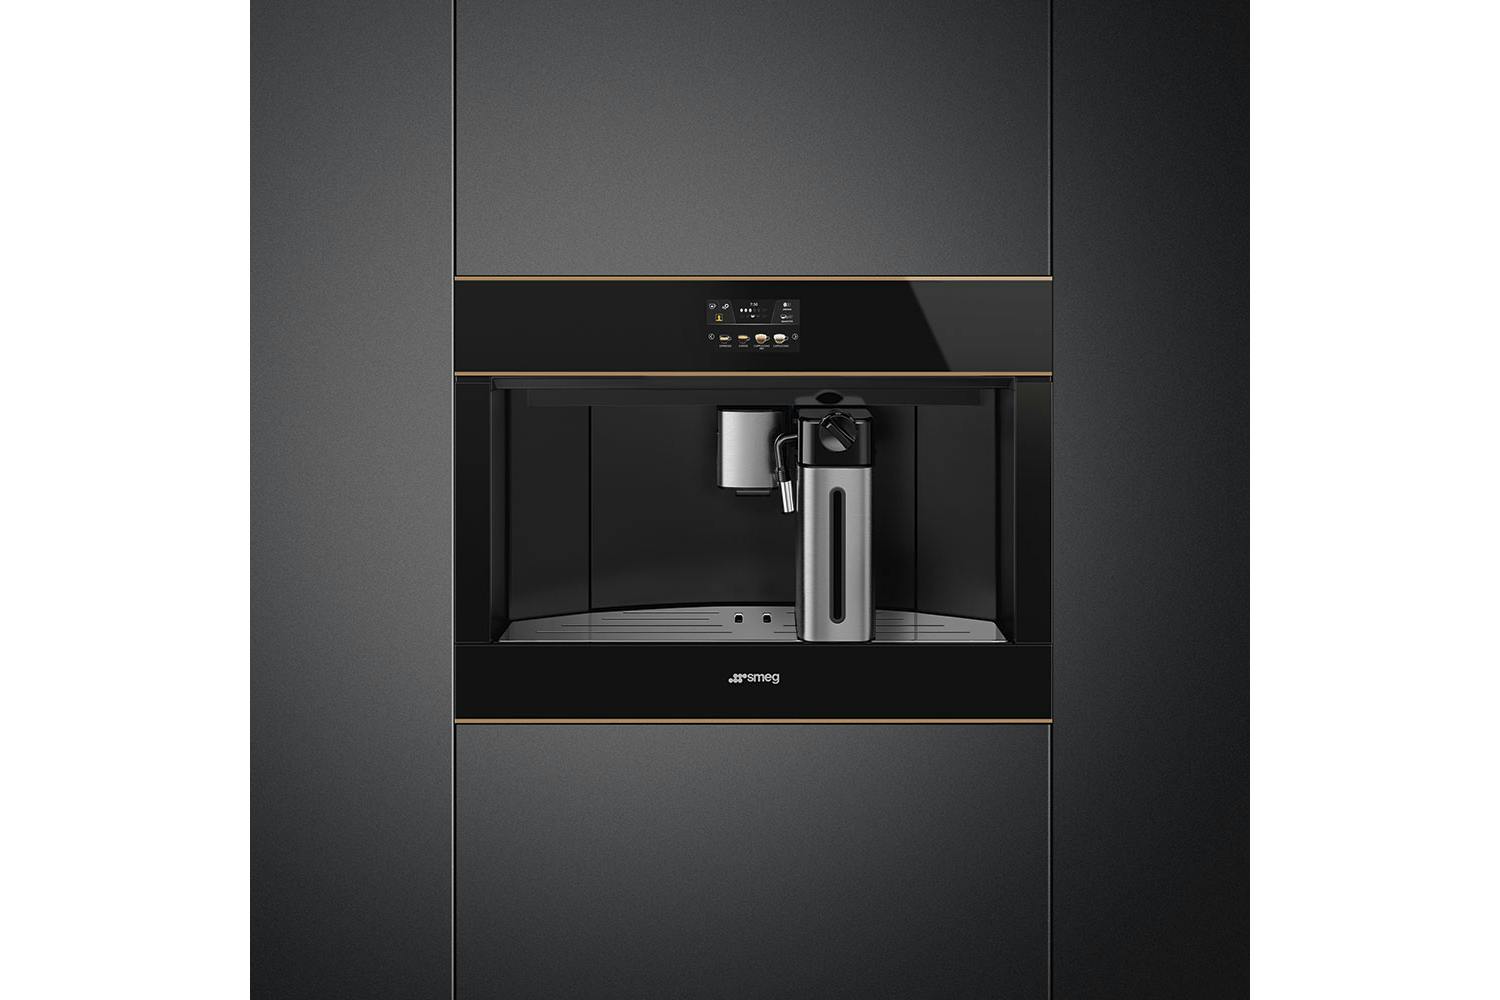 Smeg Copper Dolce Stil Novo Automatic Coffee Machine | CMS4604NR | Black